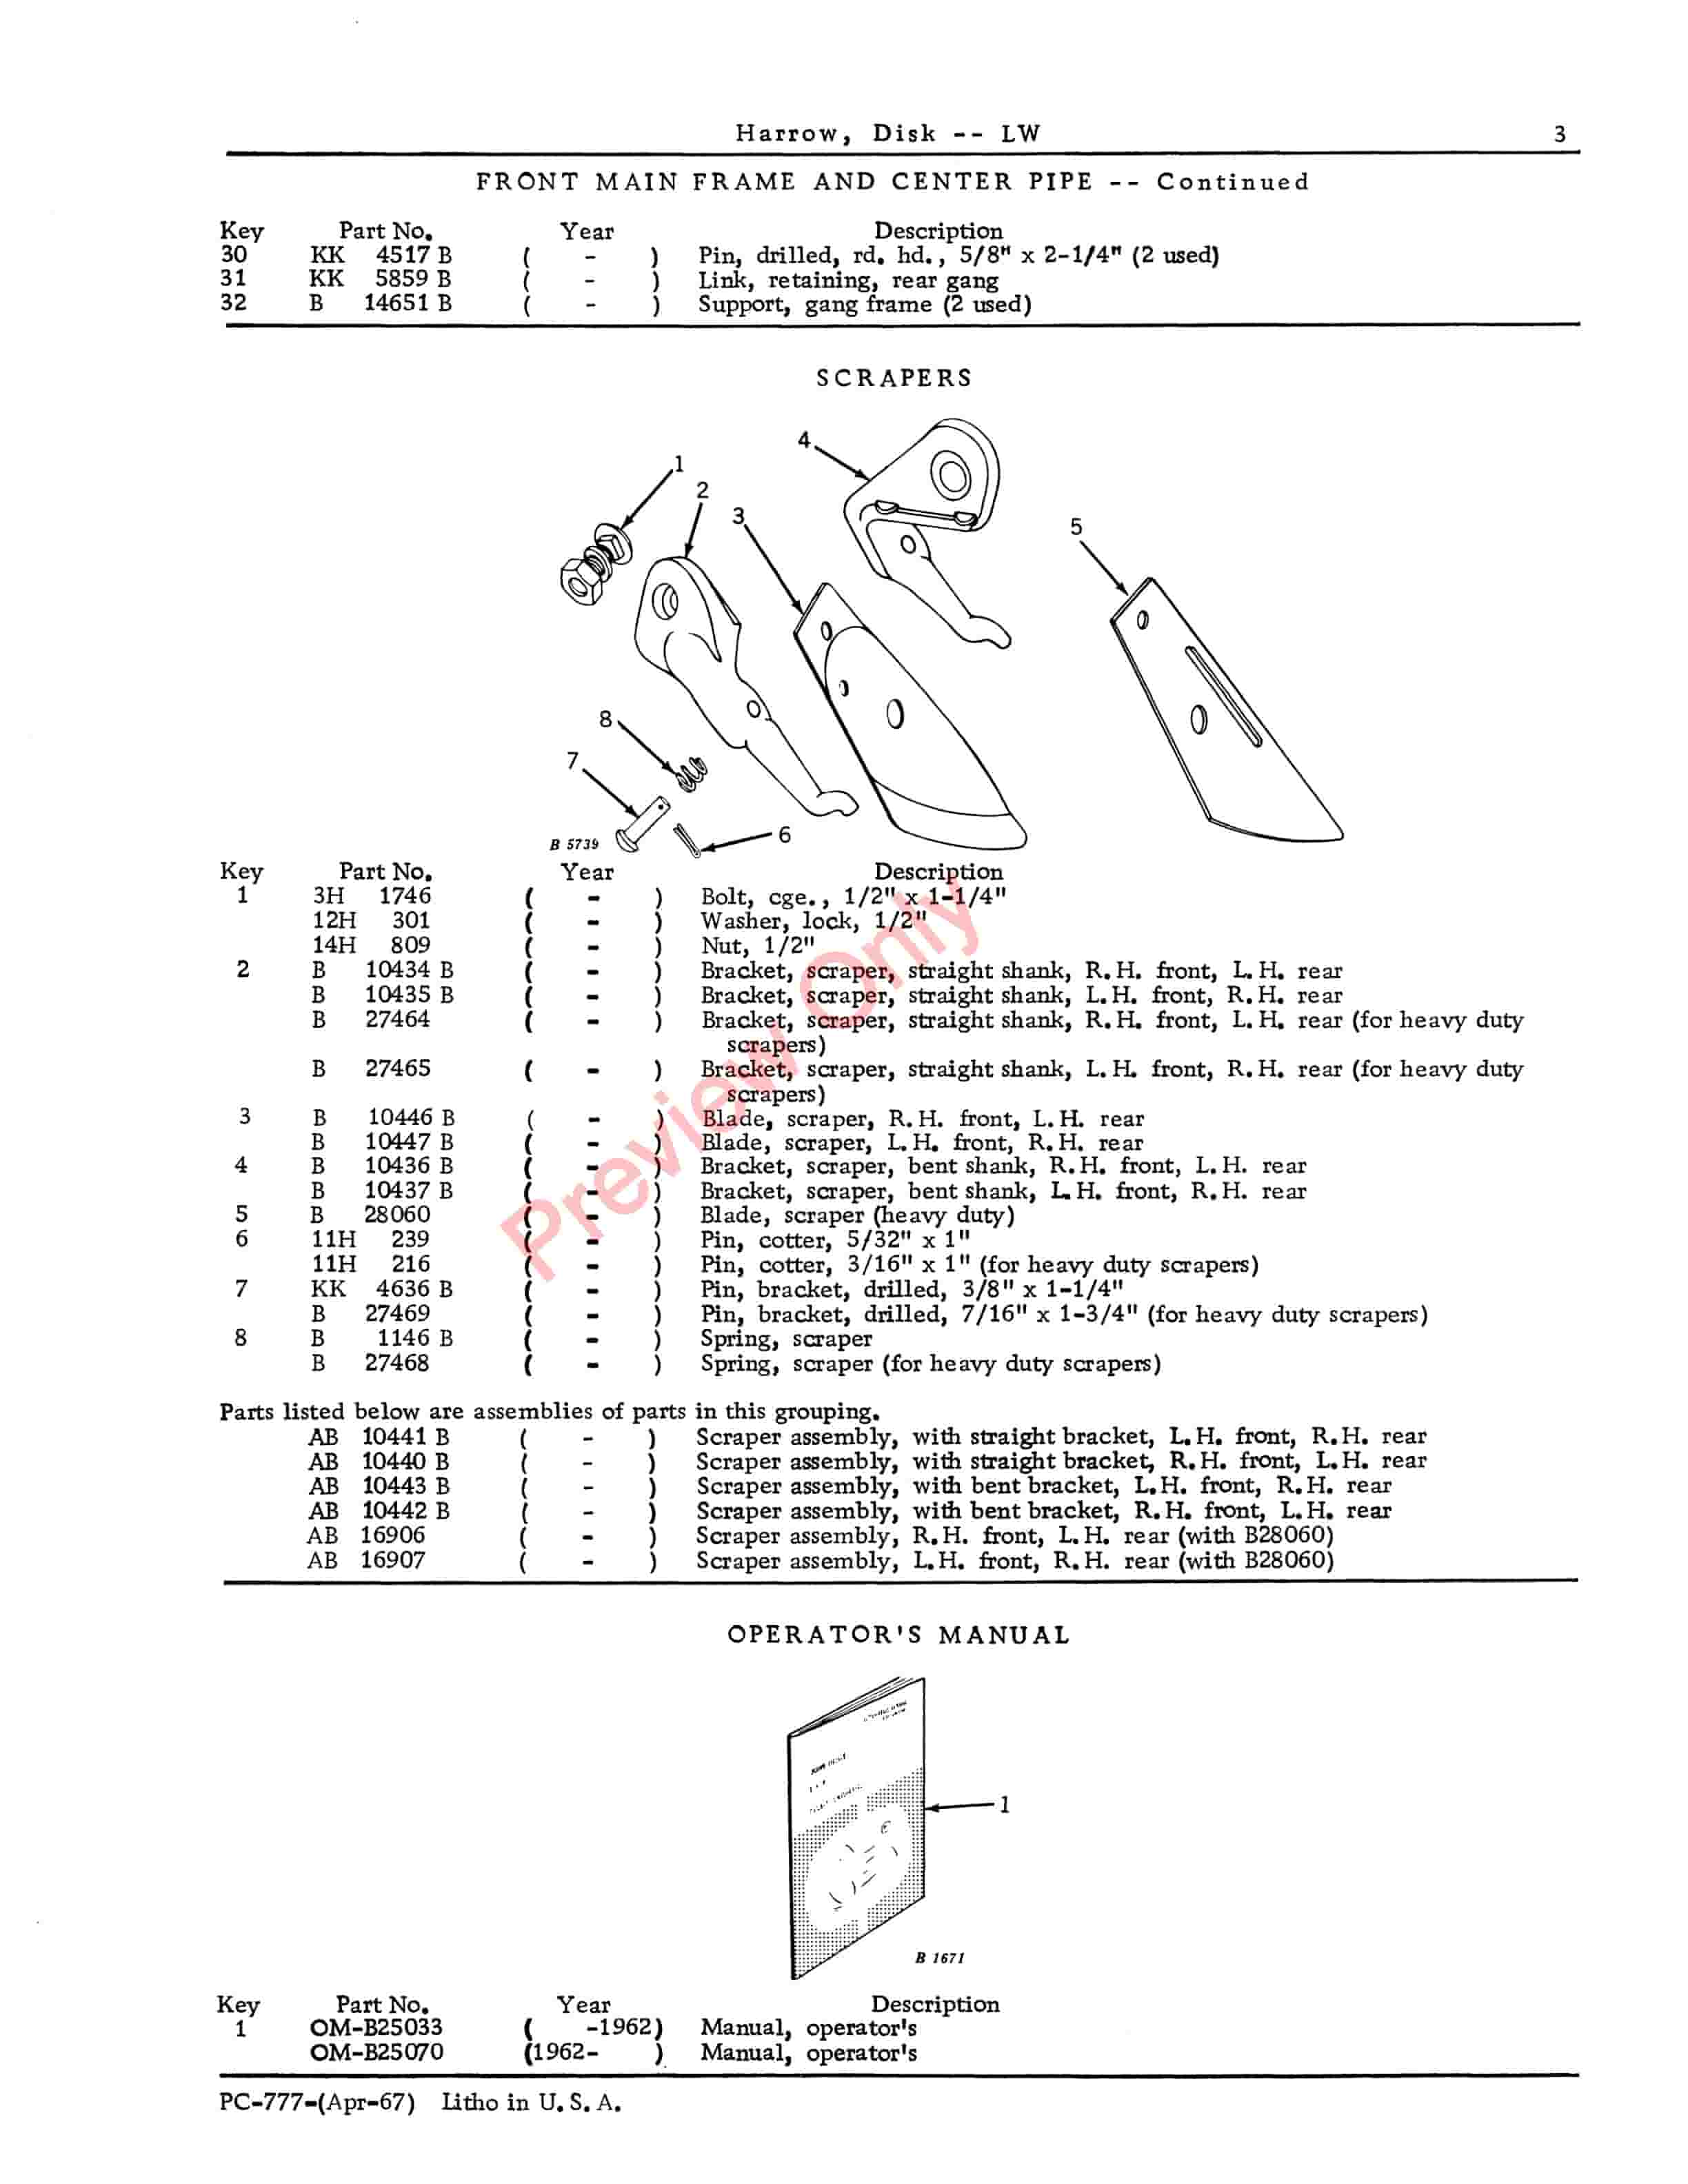 John Deere LW Disk Harrow Parts Catalog PC777 01APR67-5